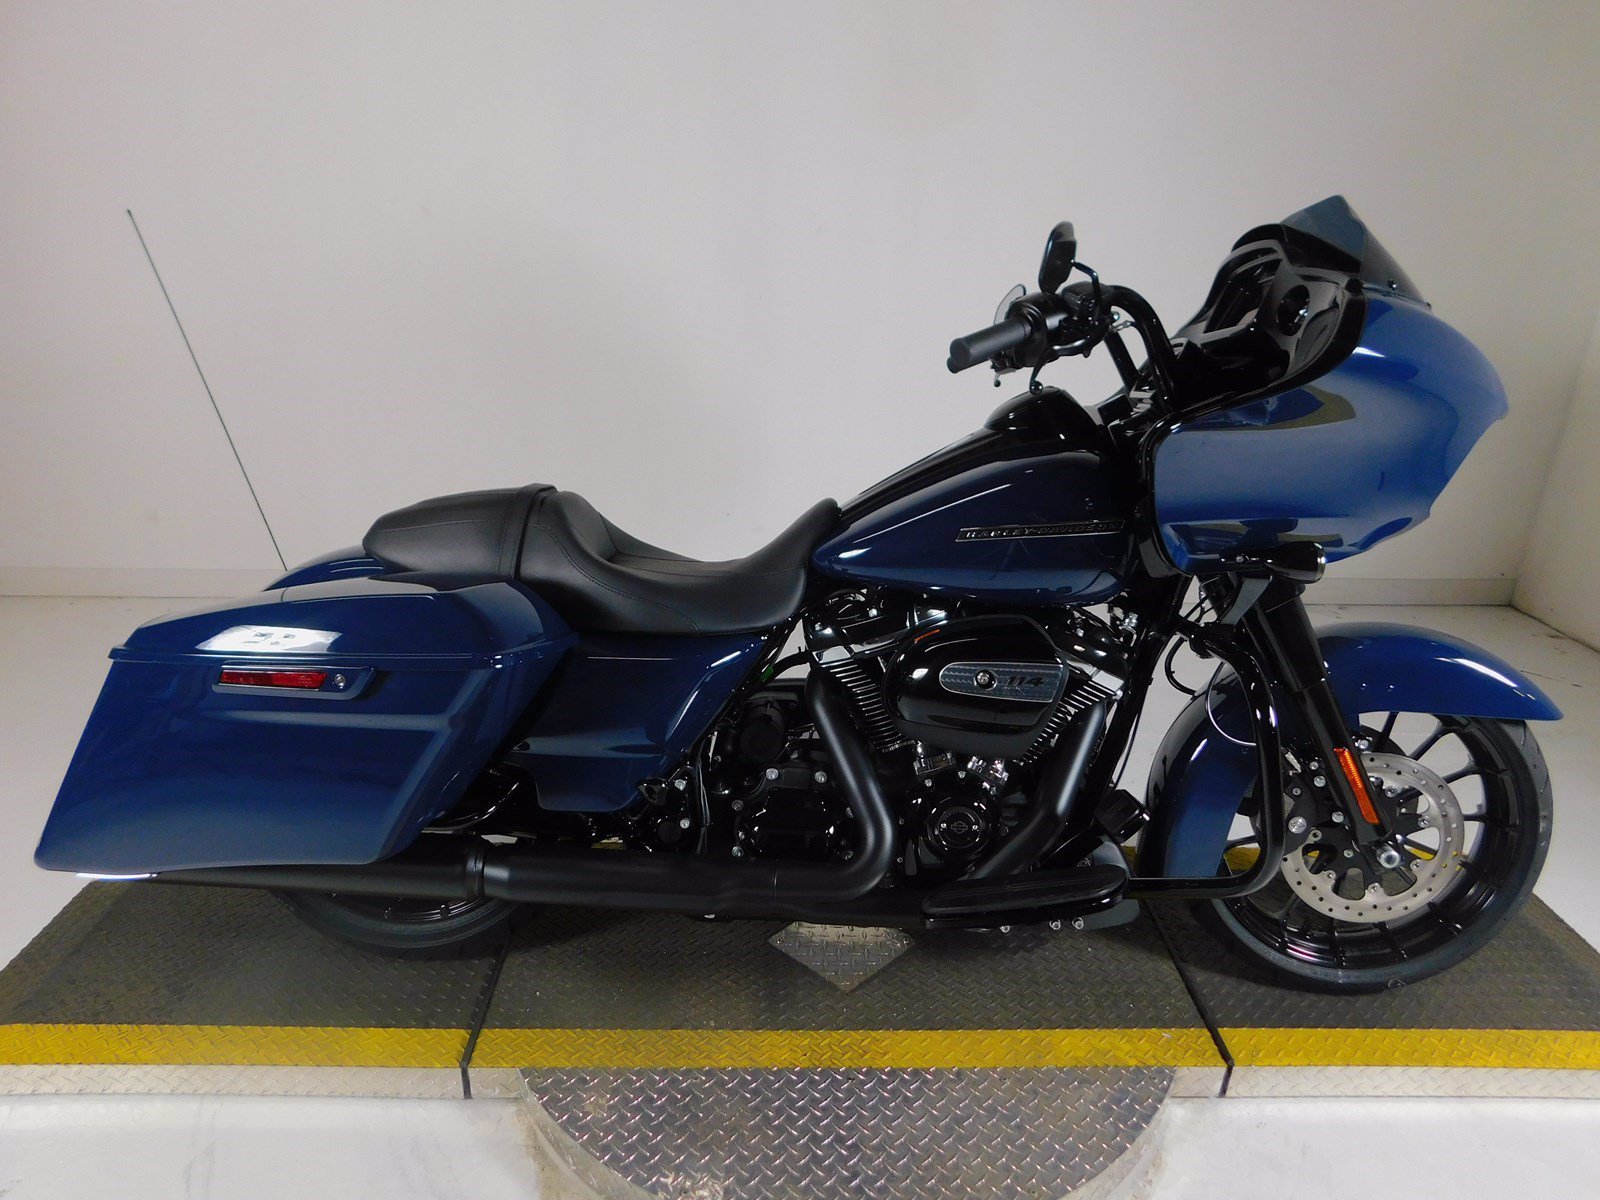 New 2019 Harley-Davidson Road Glide Special FLTRXS Touring in Riverside